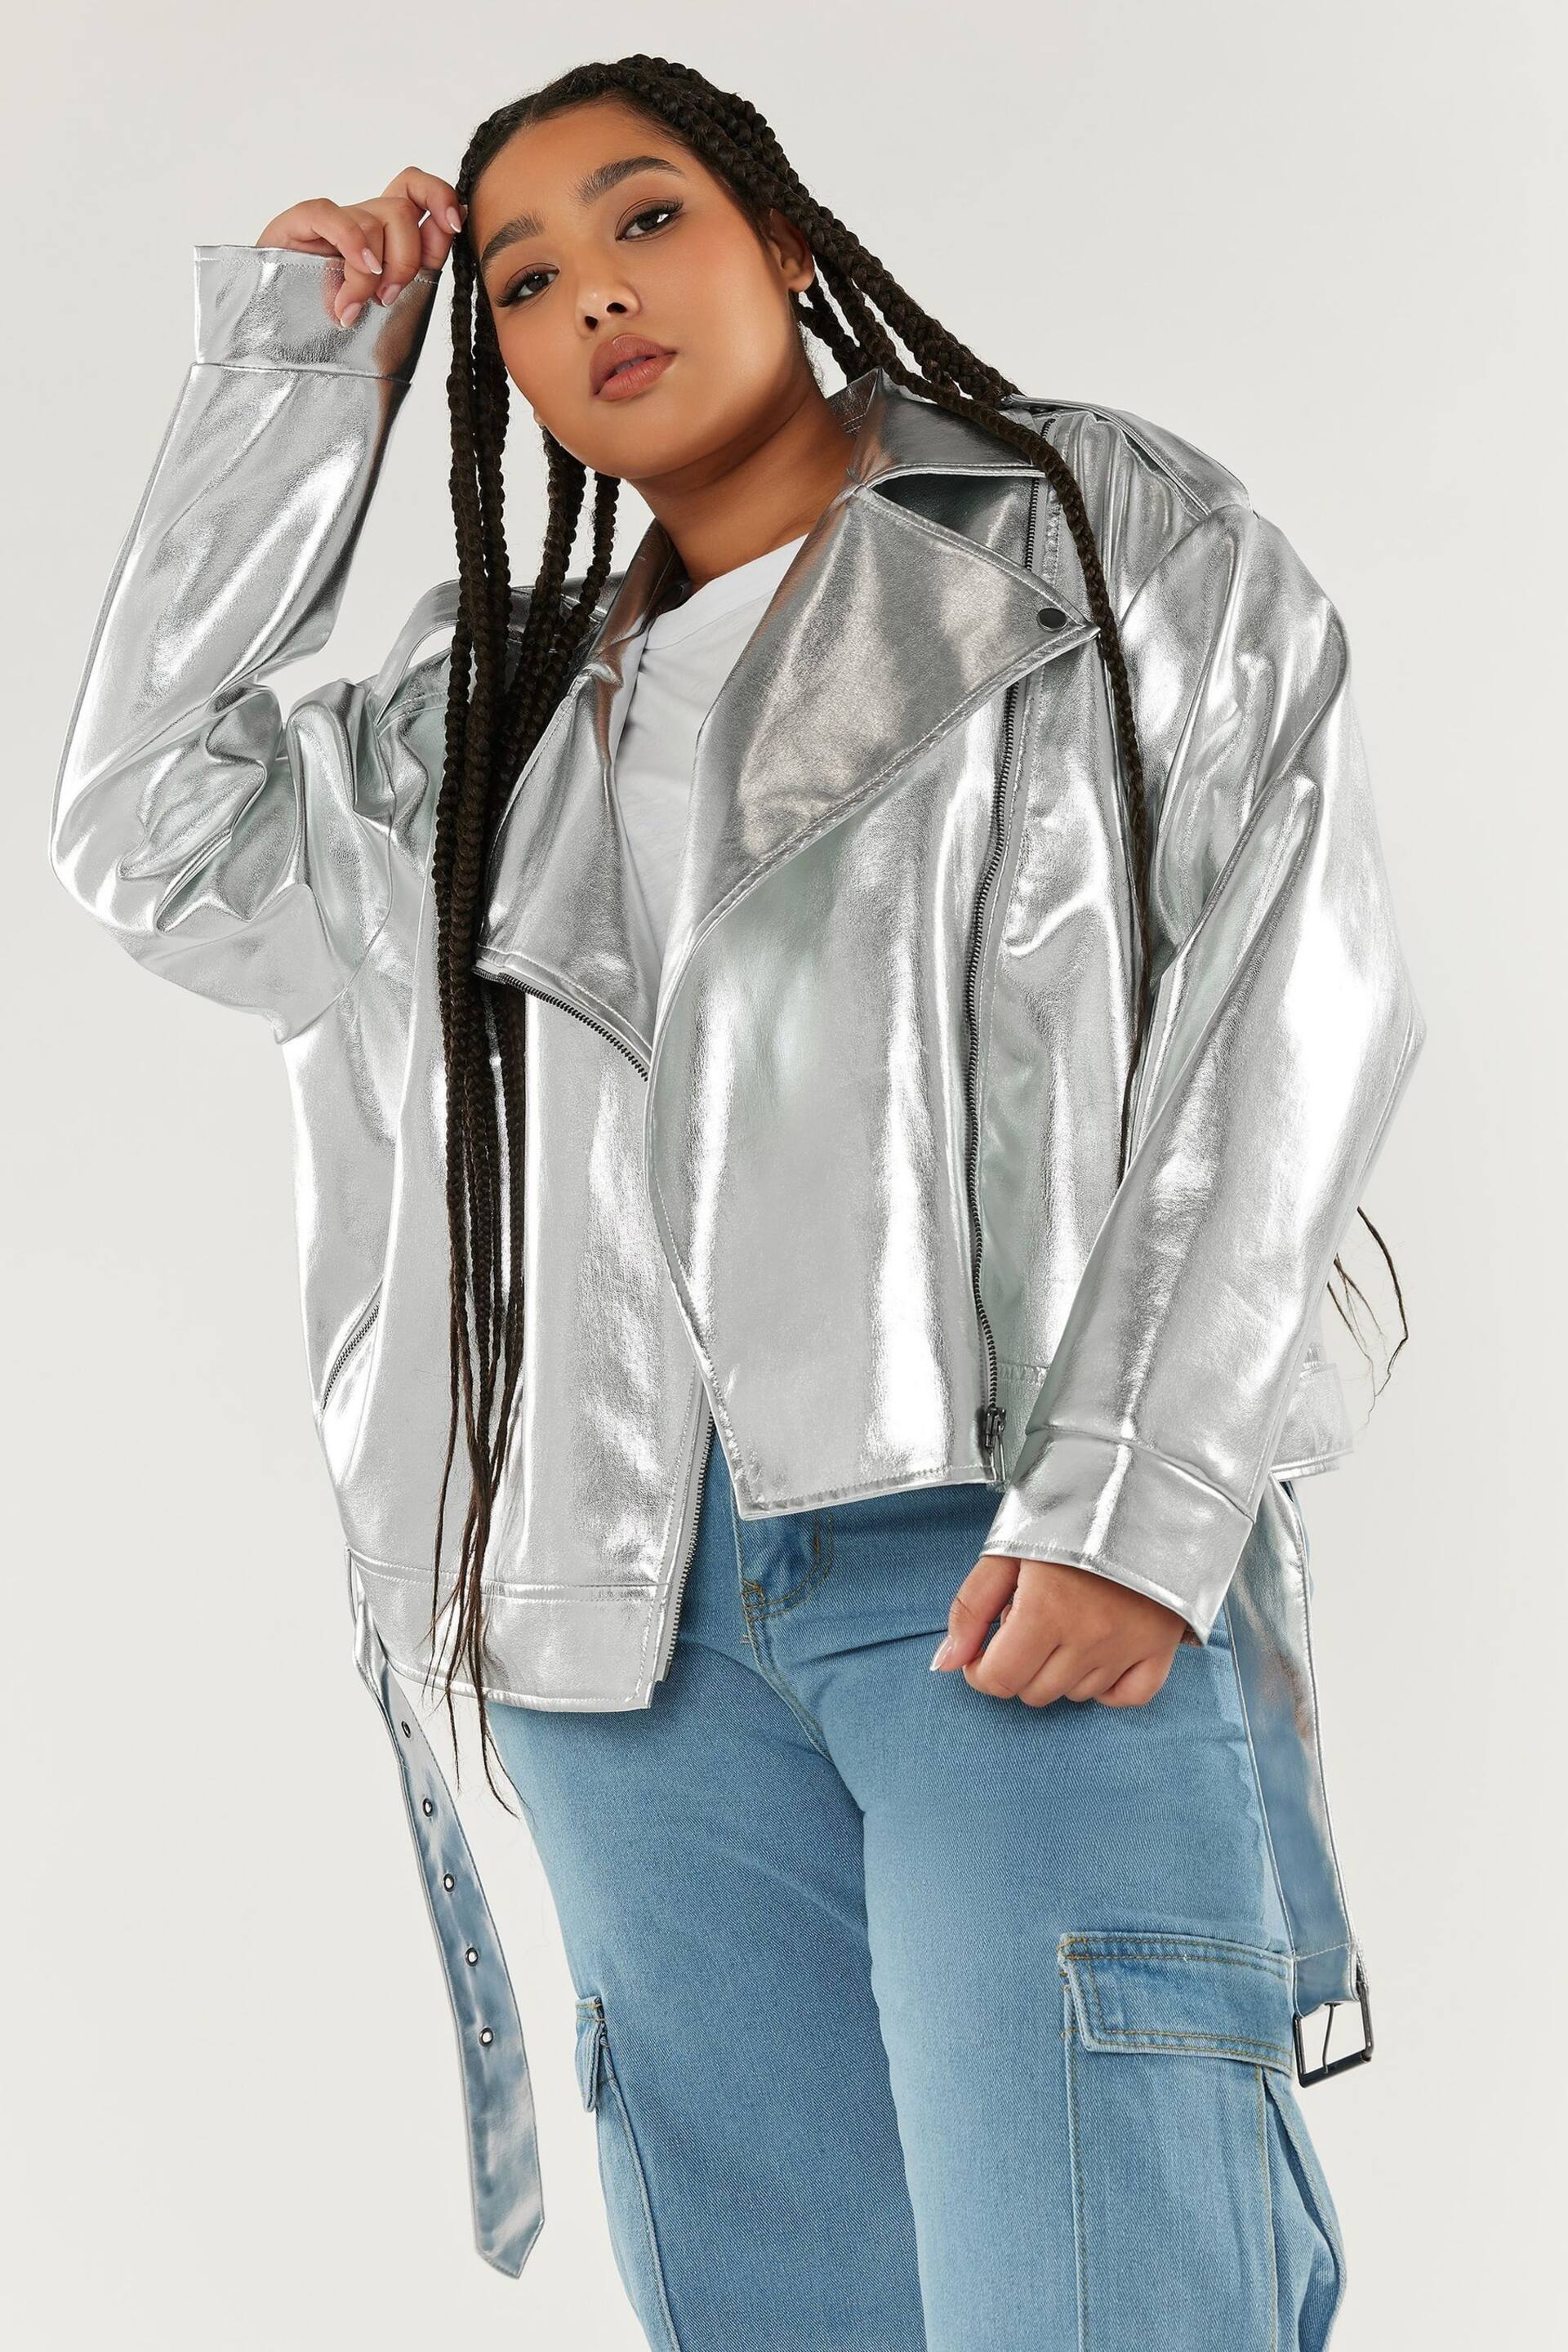 Silver Metallic Biker Jacket - Image 1 of 2